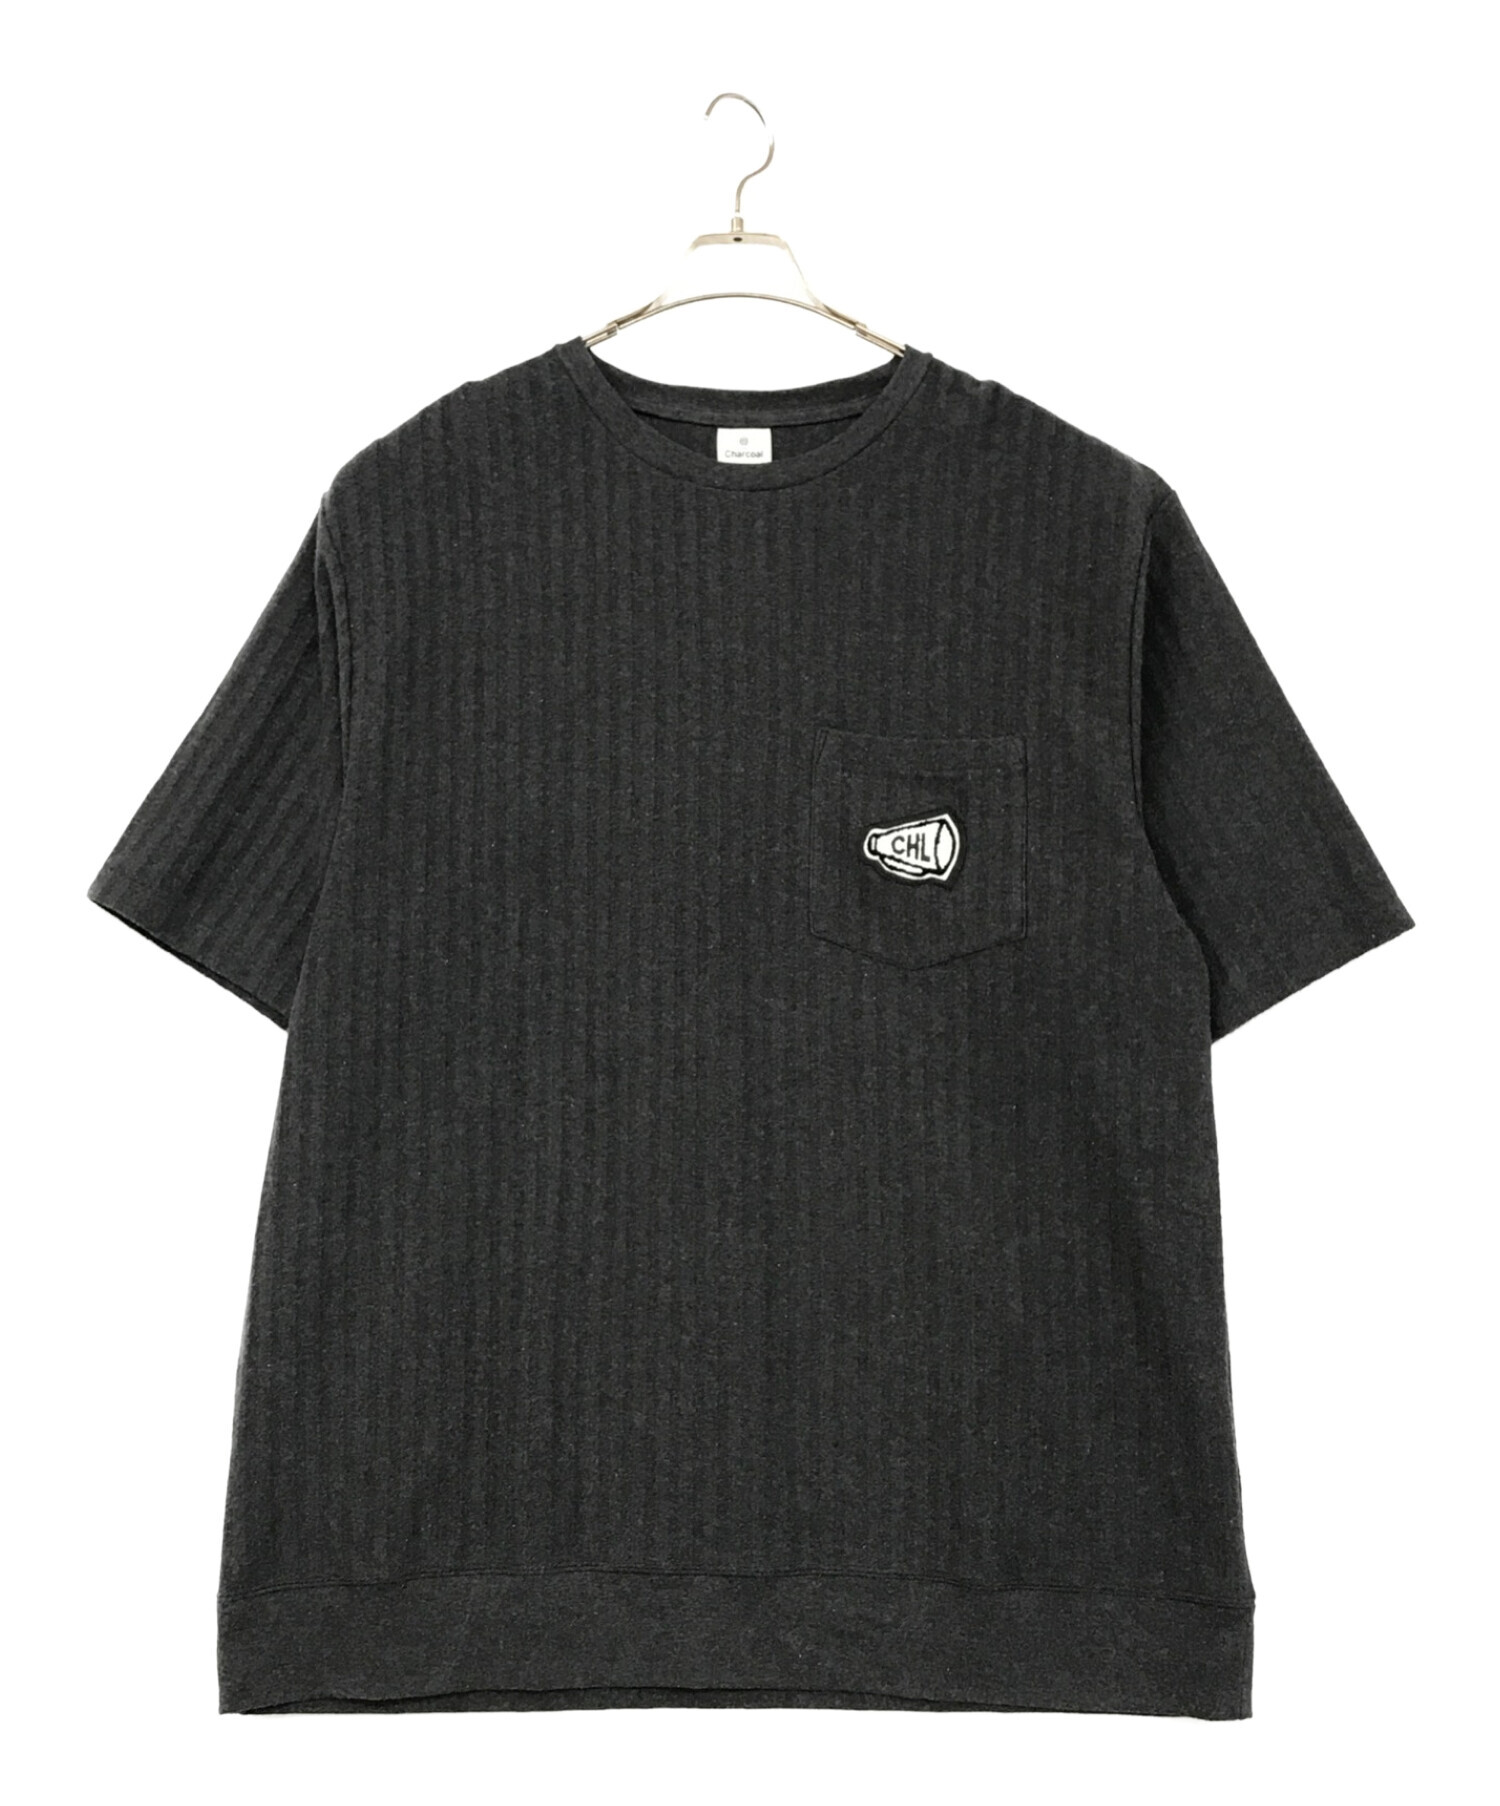 charcoal (チャコール) Tシャツ チャコールグレー サイズ:SIZE 3XL 未使用品